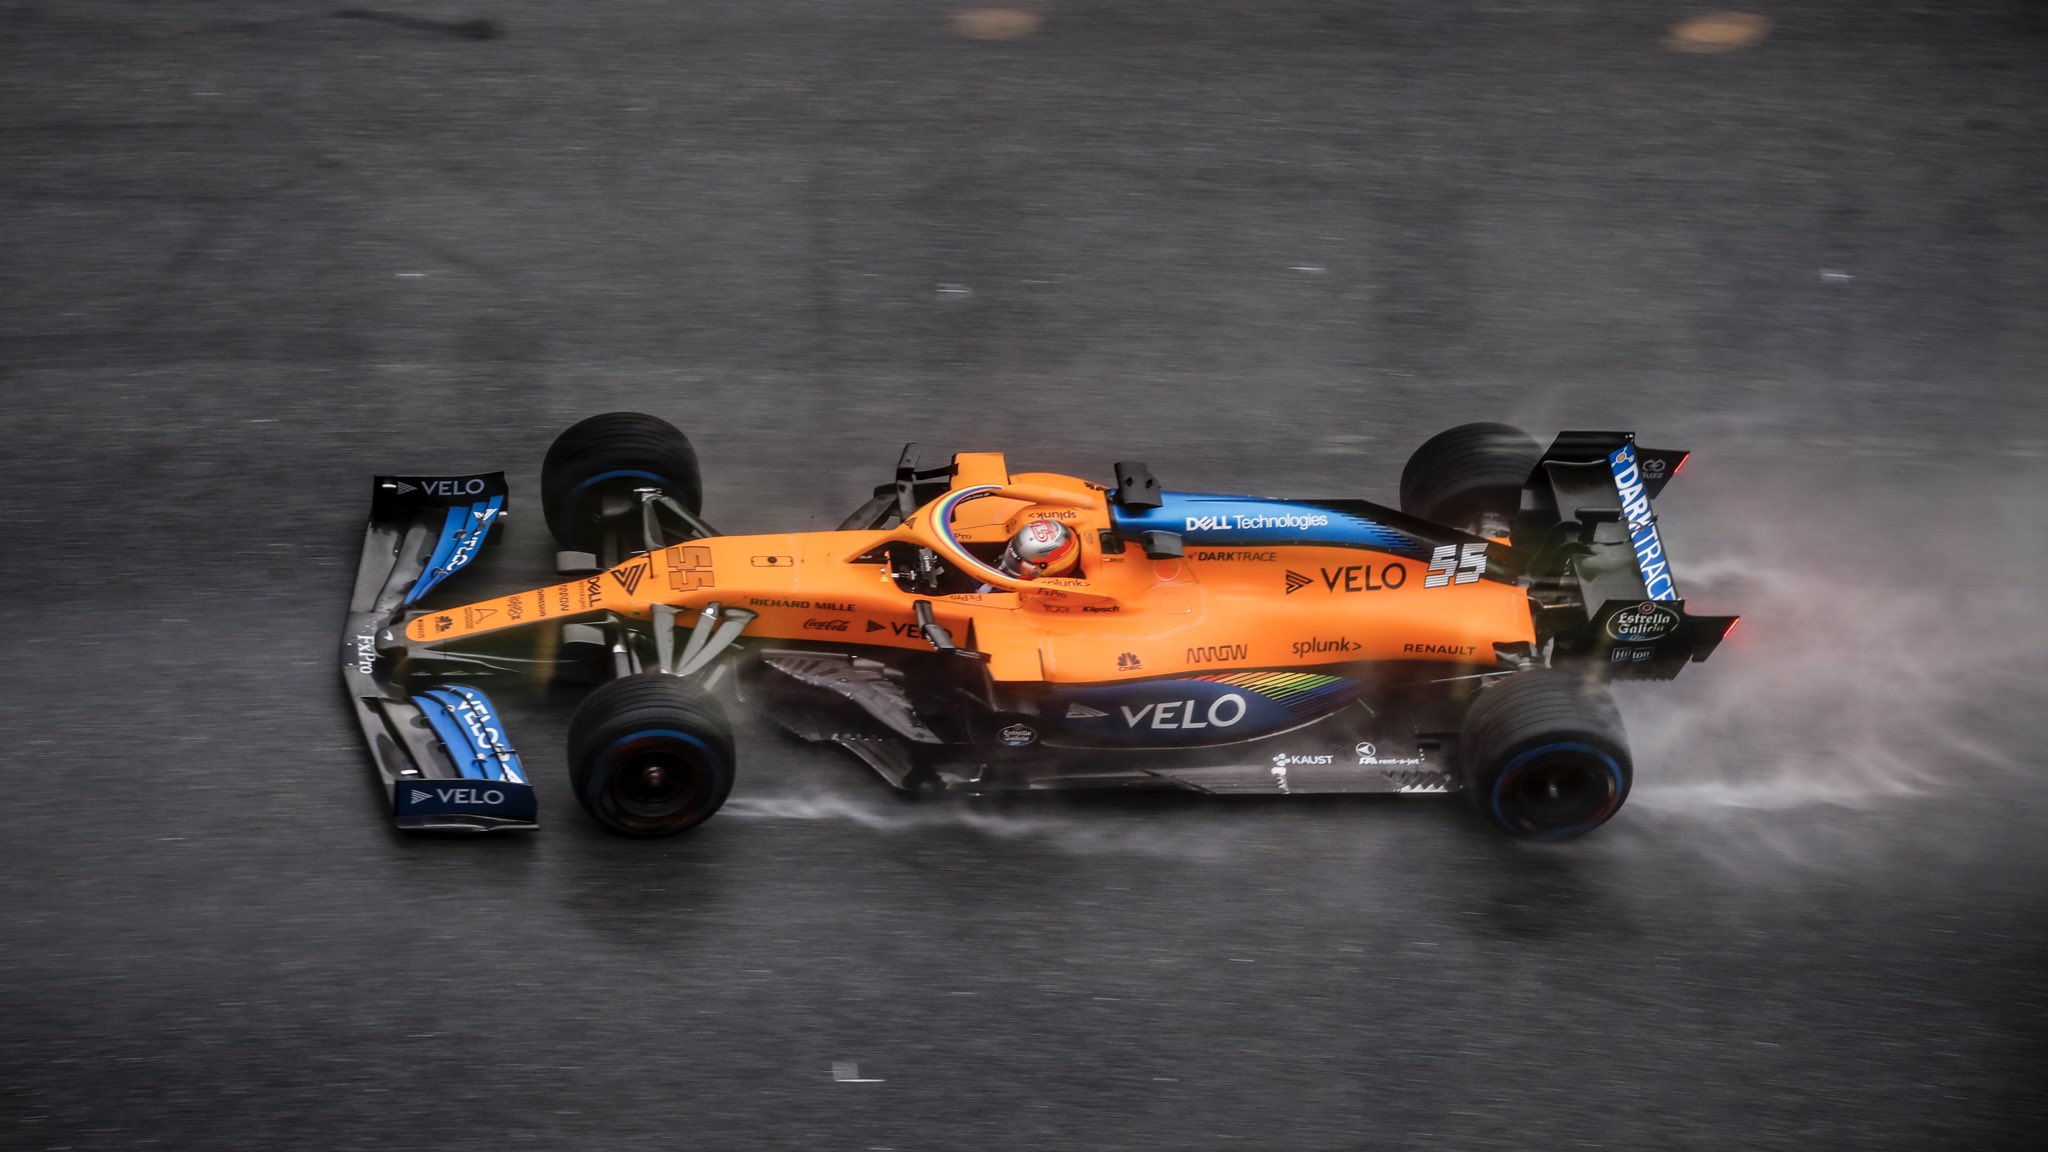 Sainz was an excellent 3rd in the much improved McLaren